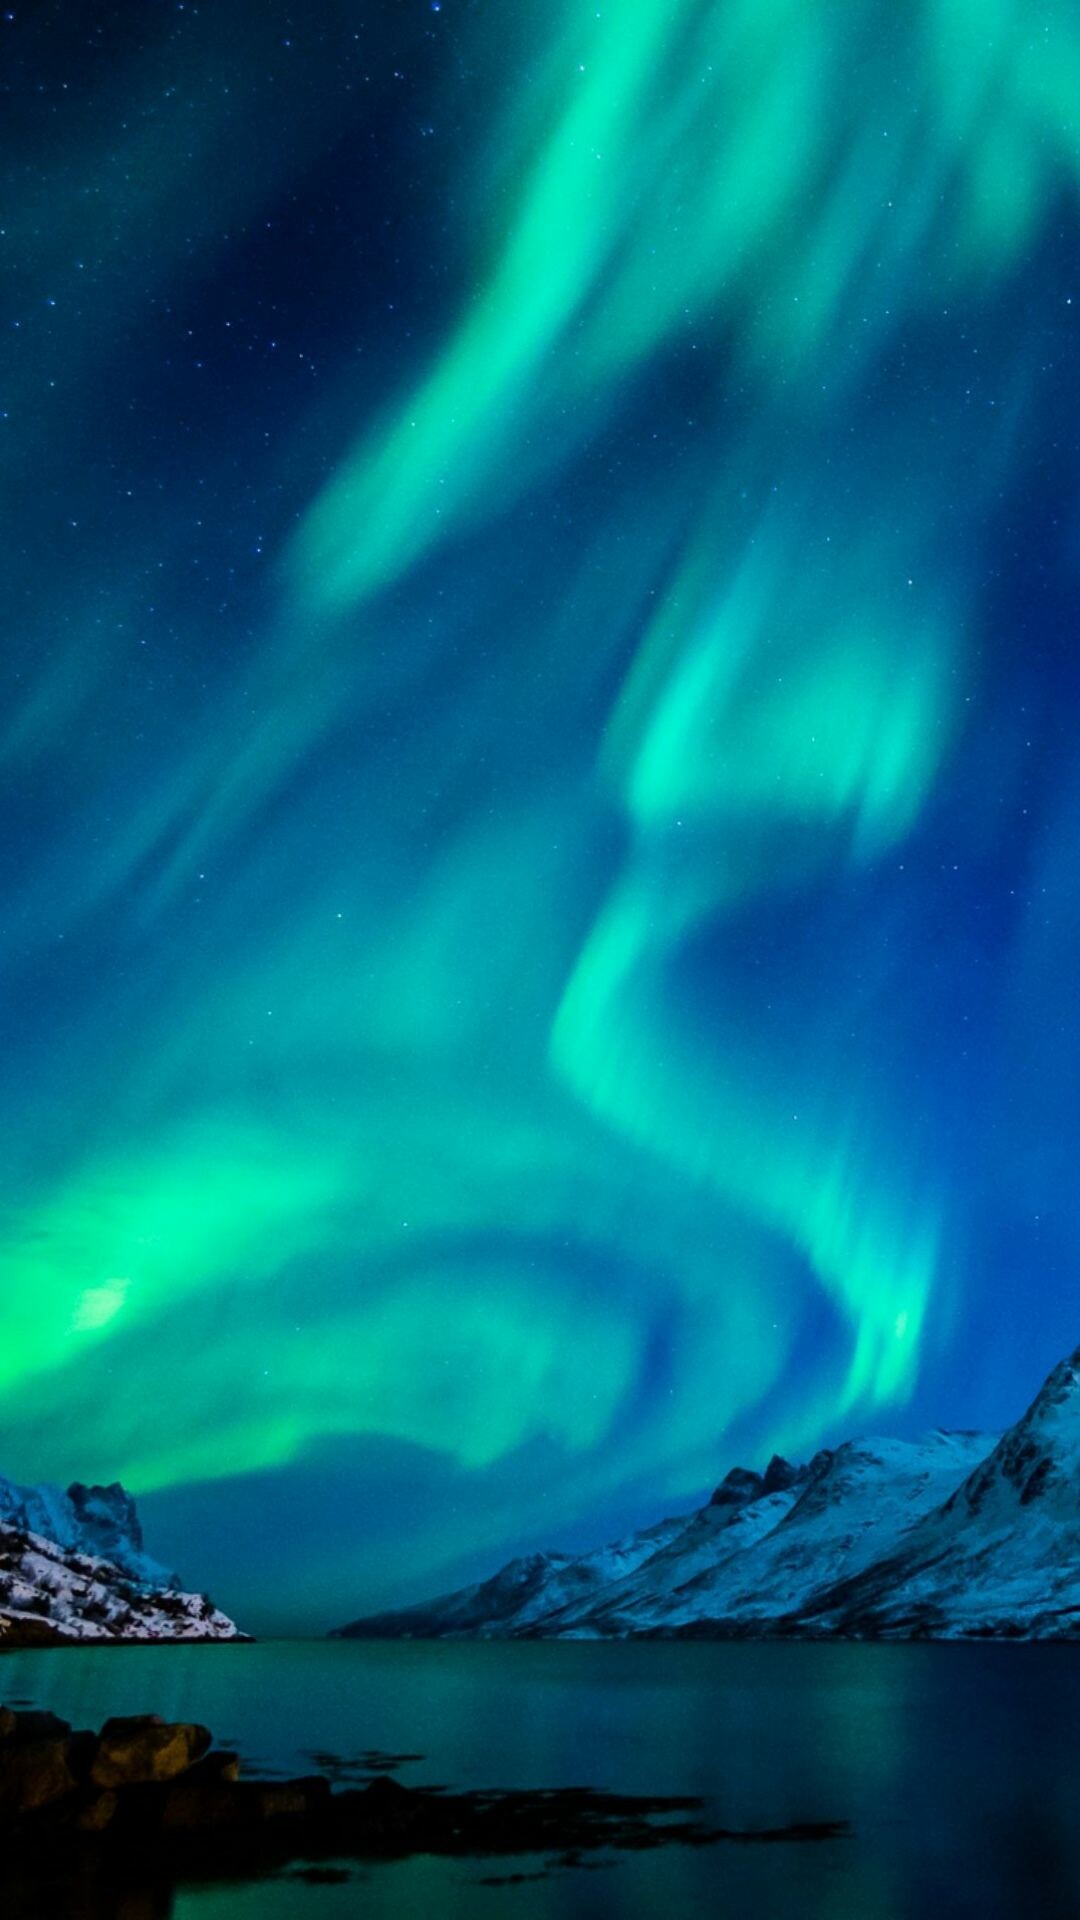 Aurora Borealis: Auroras, visible at night, appear in lower polar regions. 1080x1920 Full HD Wallpaper.